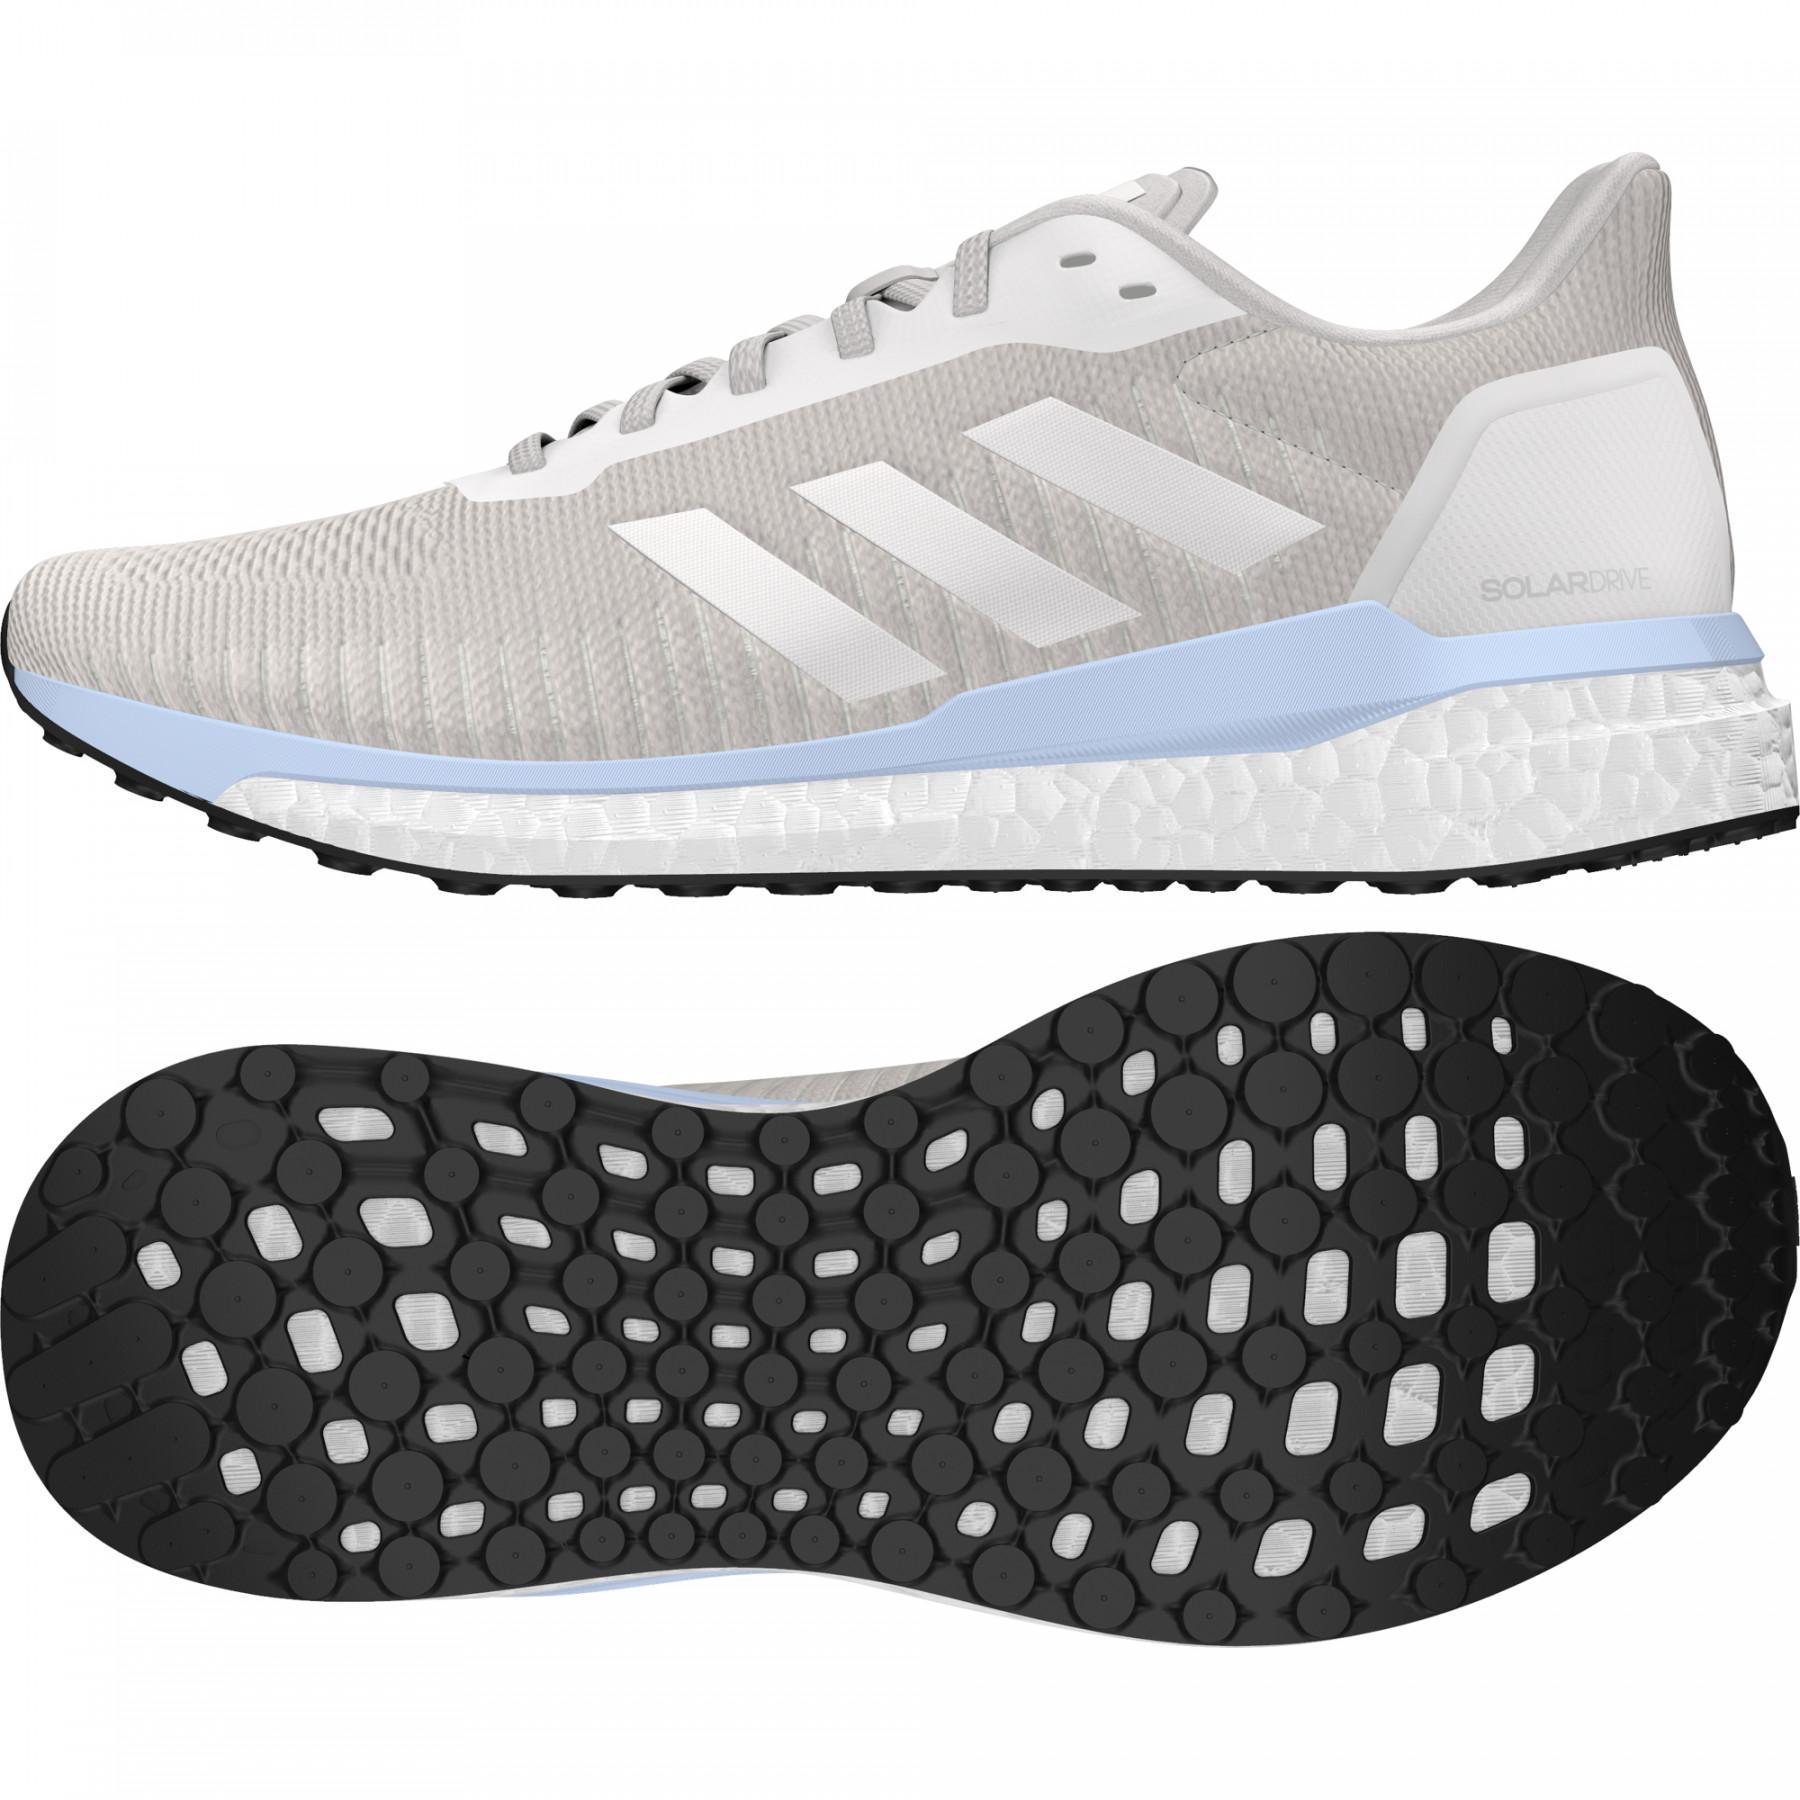 regla Paso Cadera Zapatos de mujer adidas Solar Drive 19 - adidas - Zapatillas running Mujer  - Running